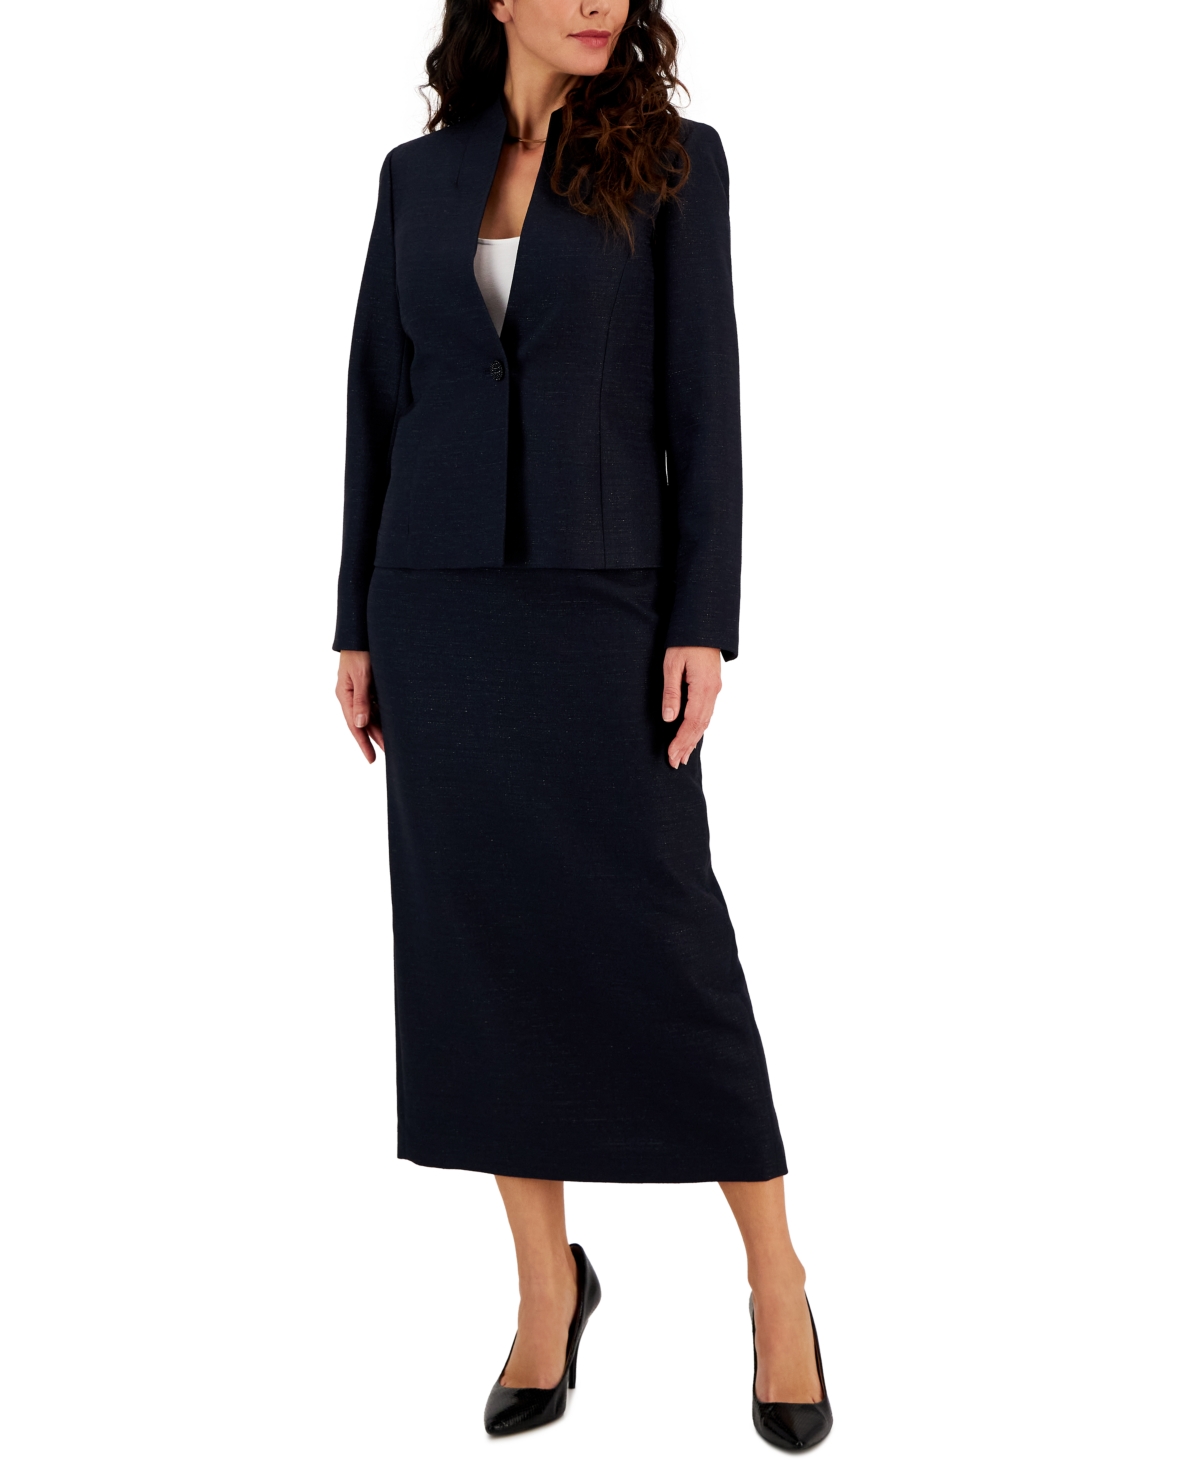 Women's Shimmer Tweed Skirt Suit, Regular and Petite Sizes - Navy